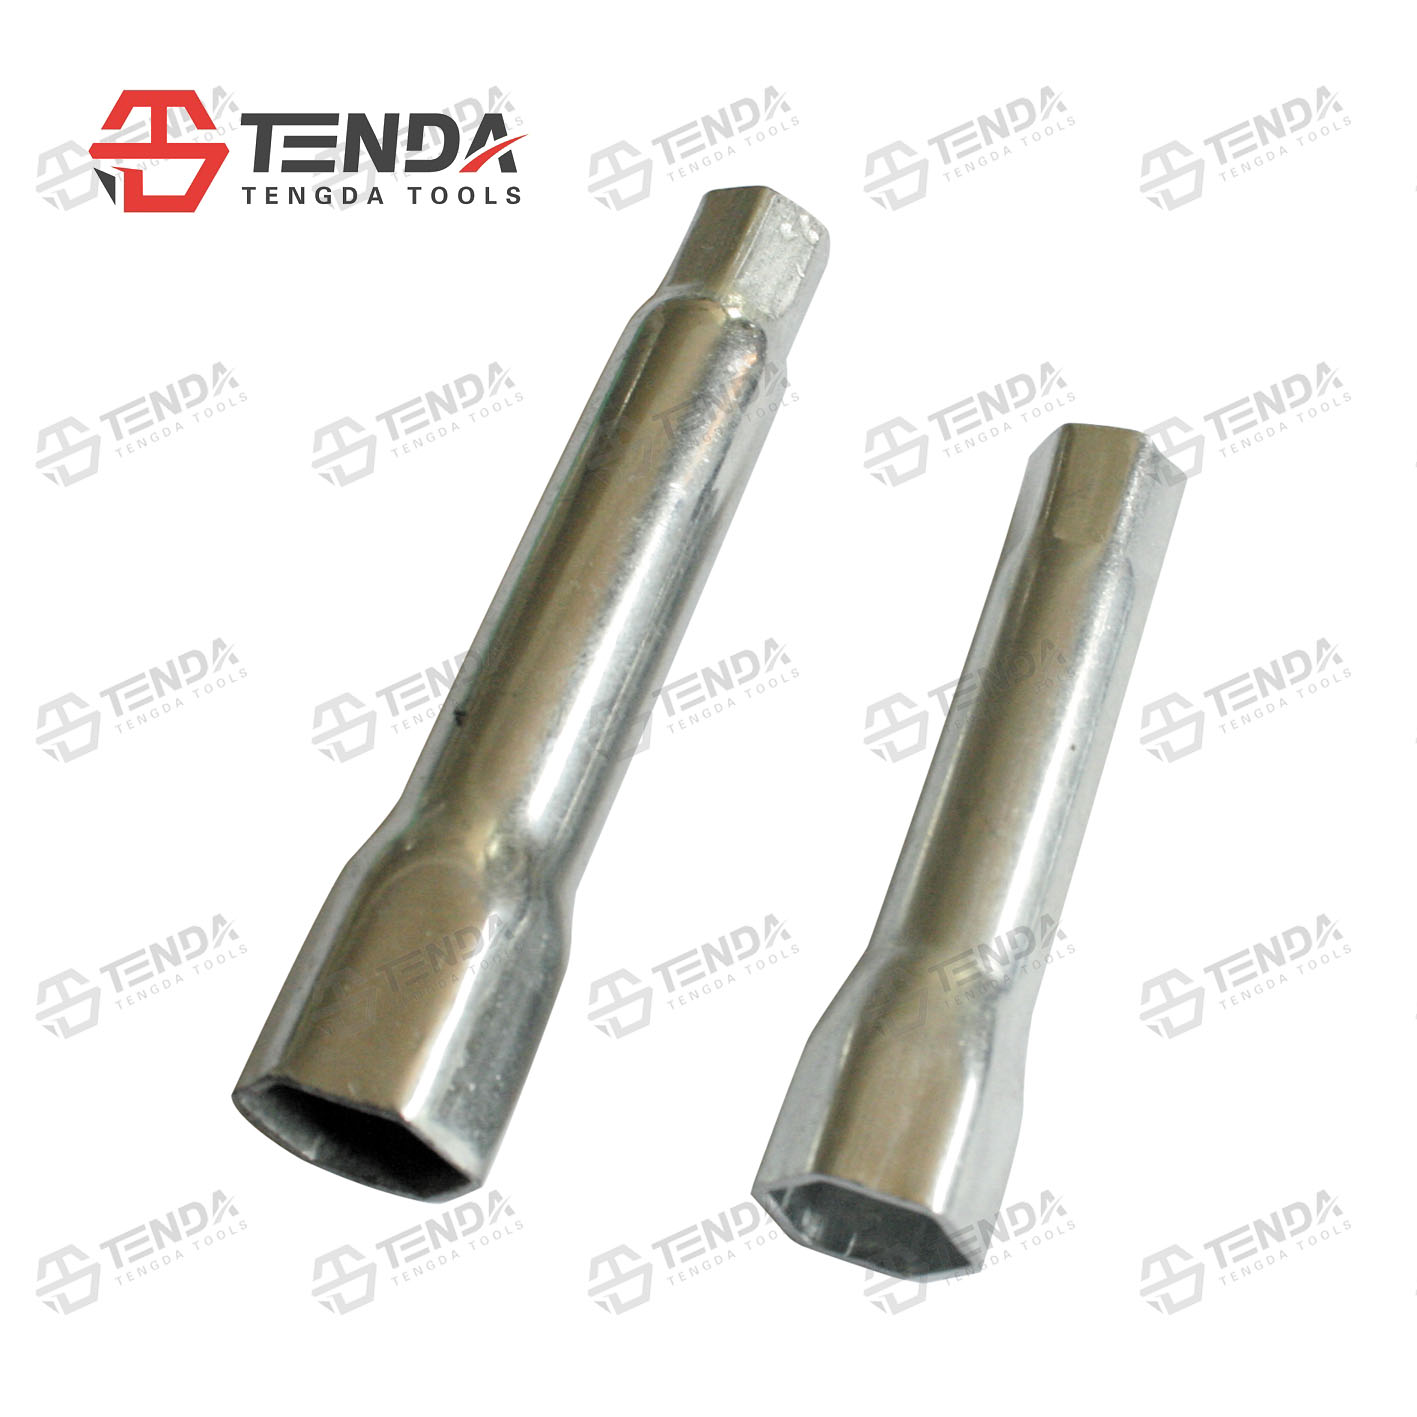 TD-070-03 Spark Plug Wrench